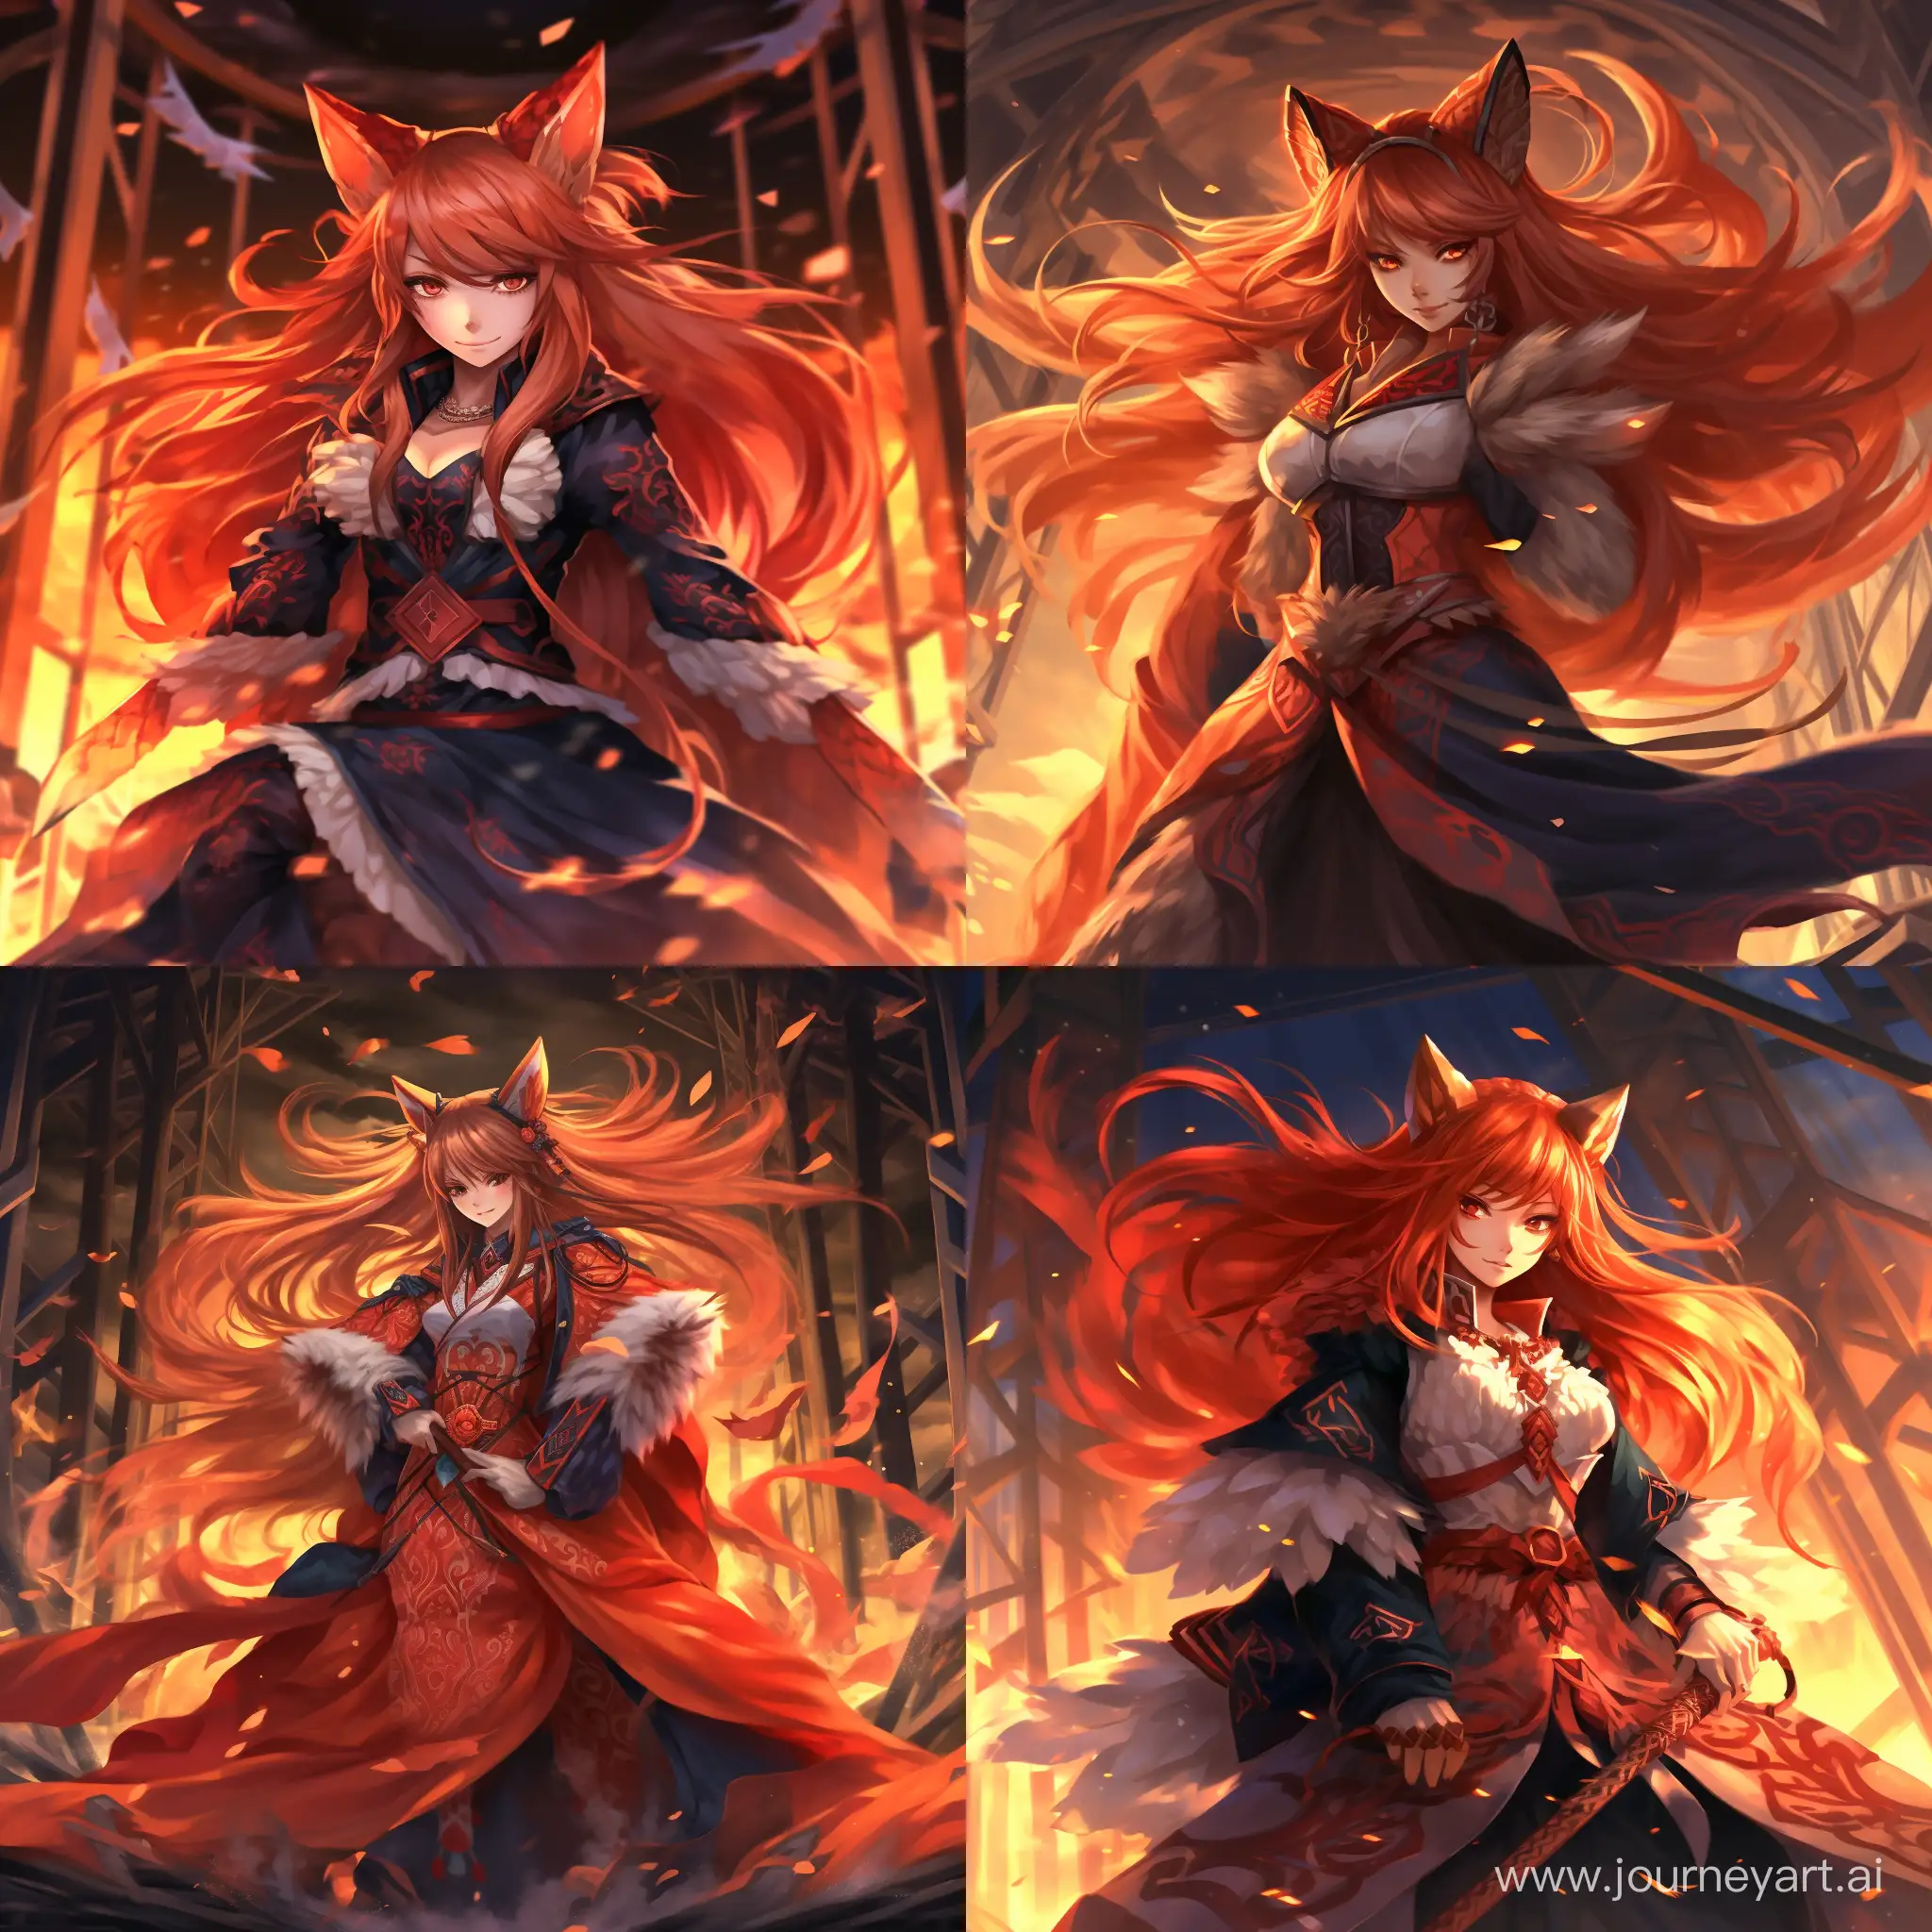 Fiery-Kitsune-Woman-Casting-Fire-Magic-in-Red-and-Black-Kimono